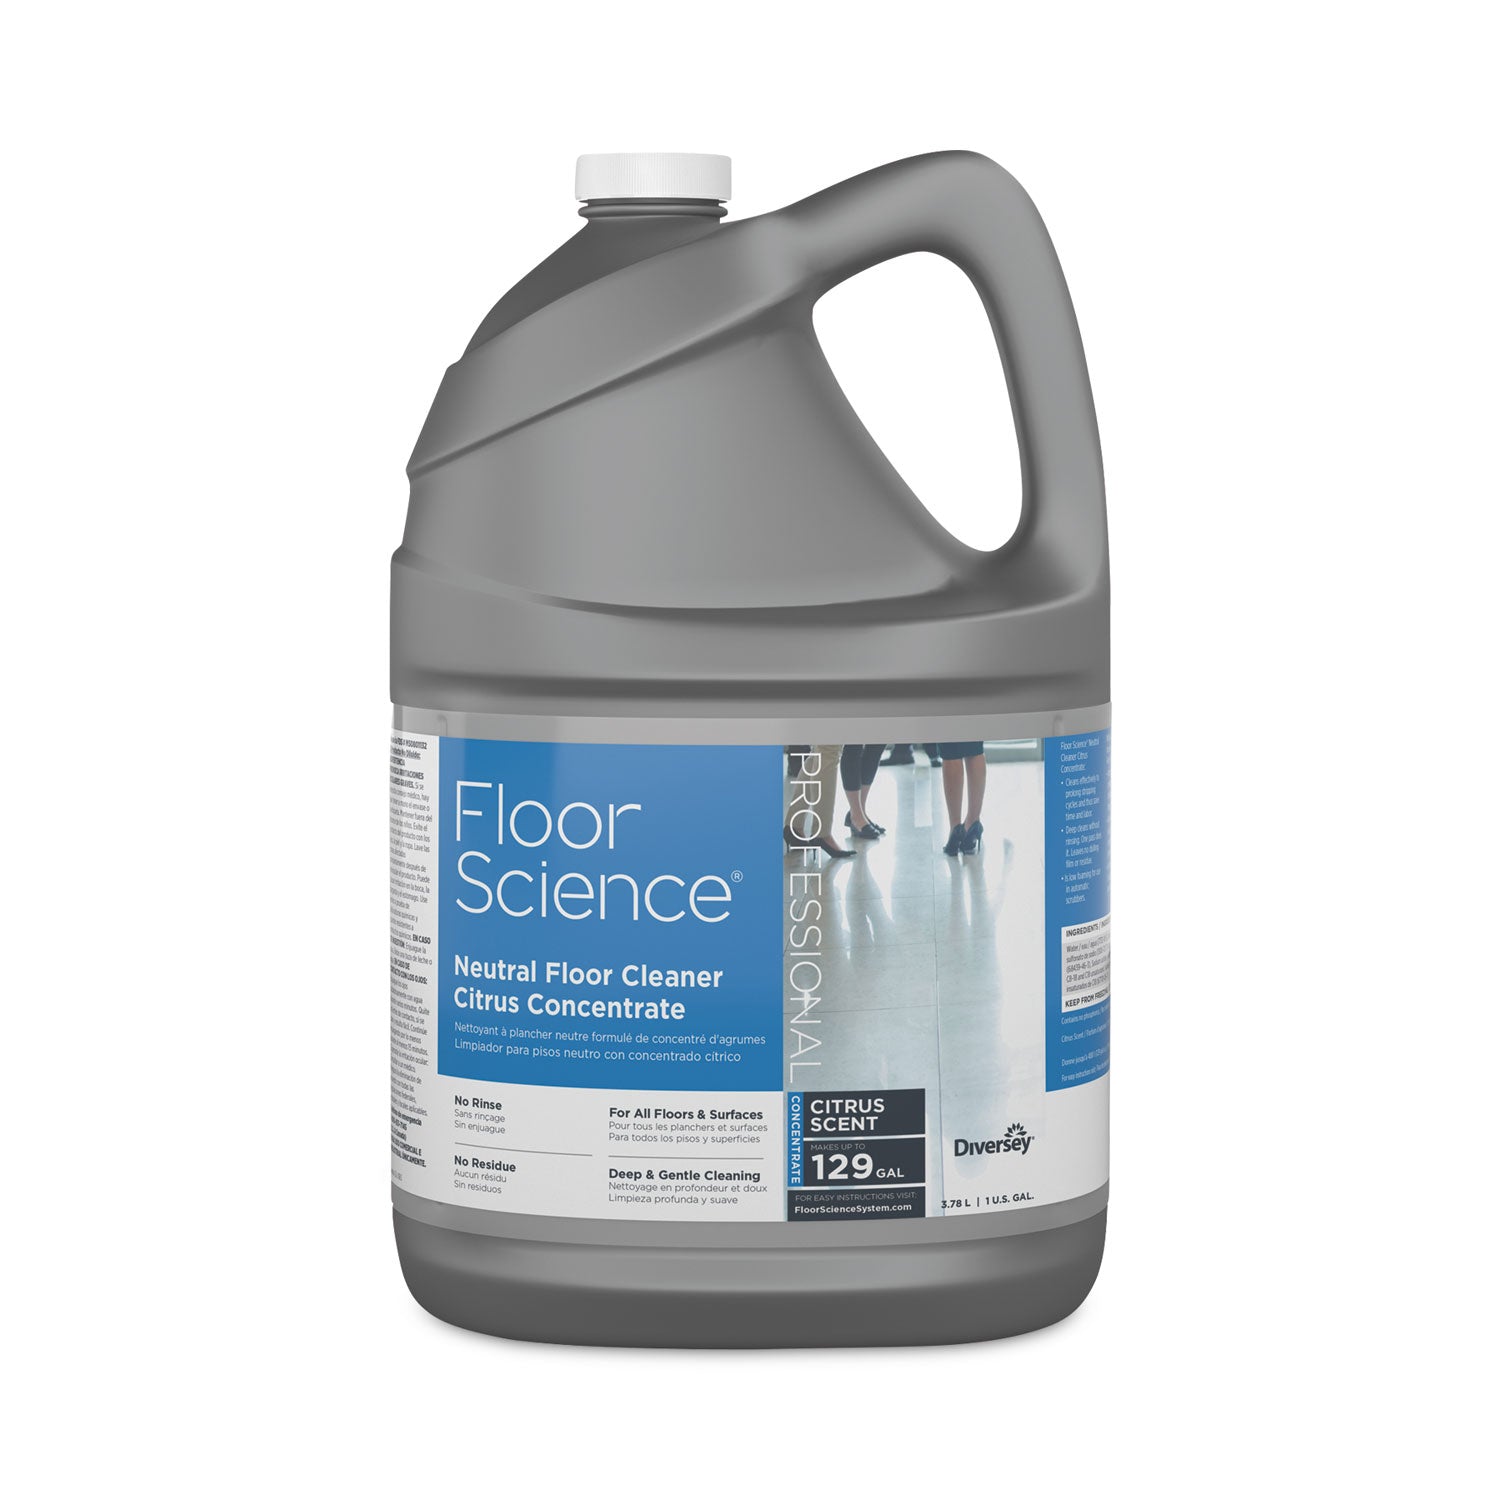 floor-science-neutral-floor-cleaner-concentrate-citrus-scent-1-gal-4-carton_dvocbd540441 - 5